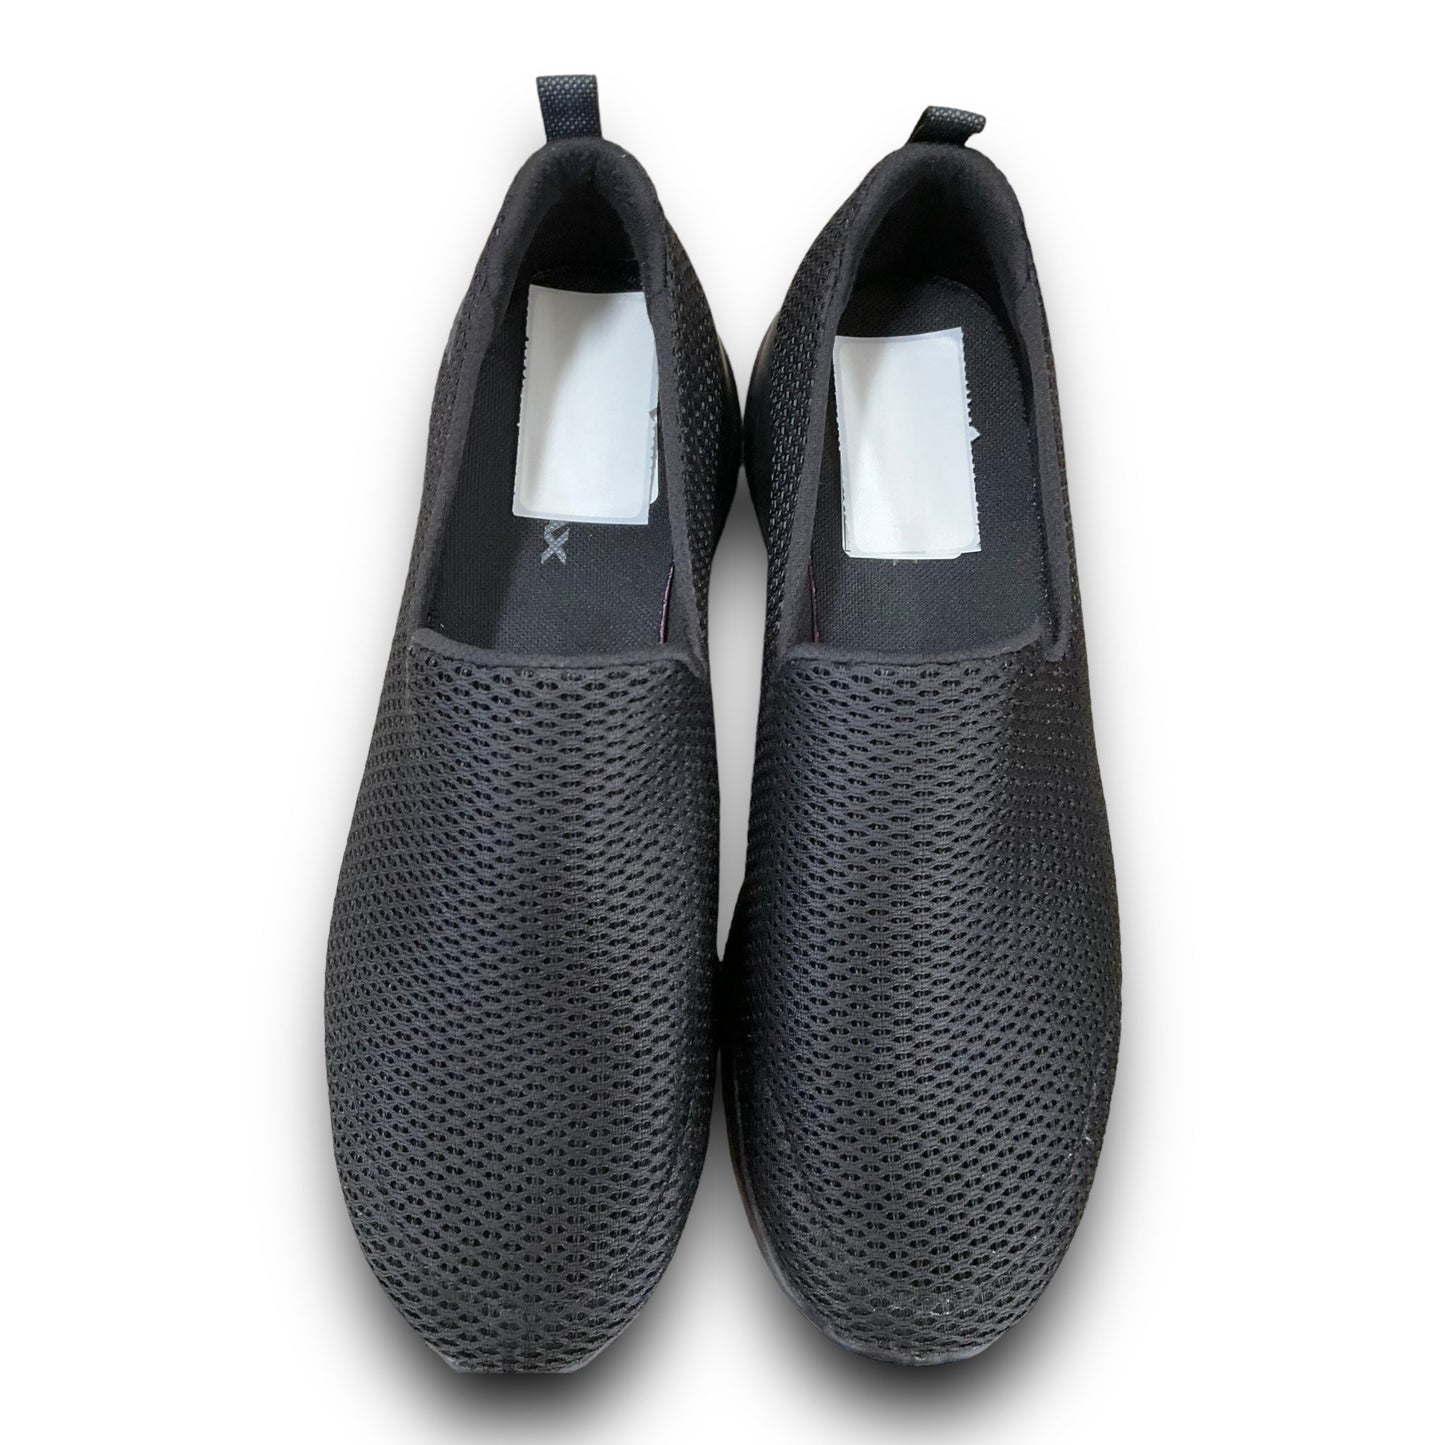 Black Shoes Athletic Skechers, Size 9